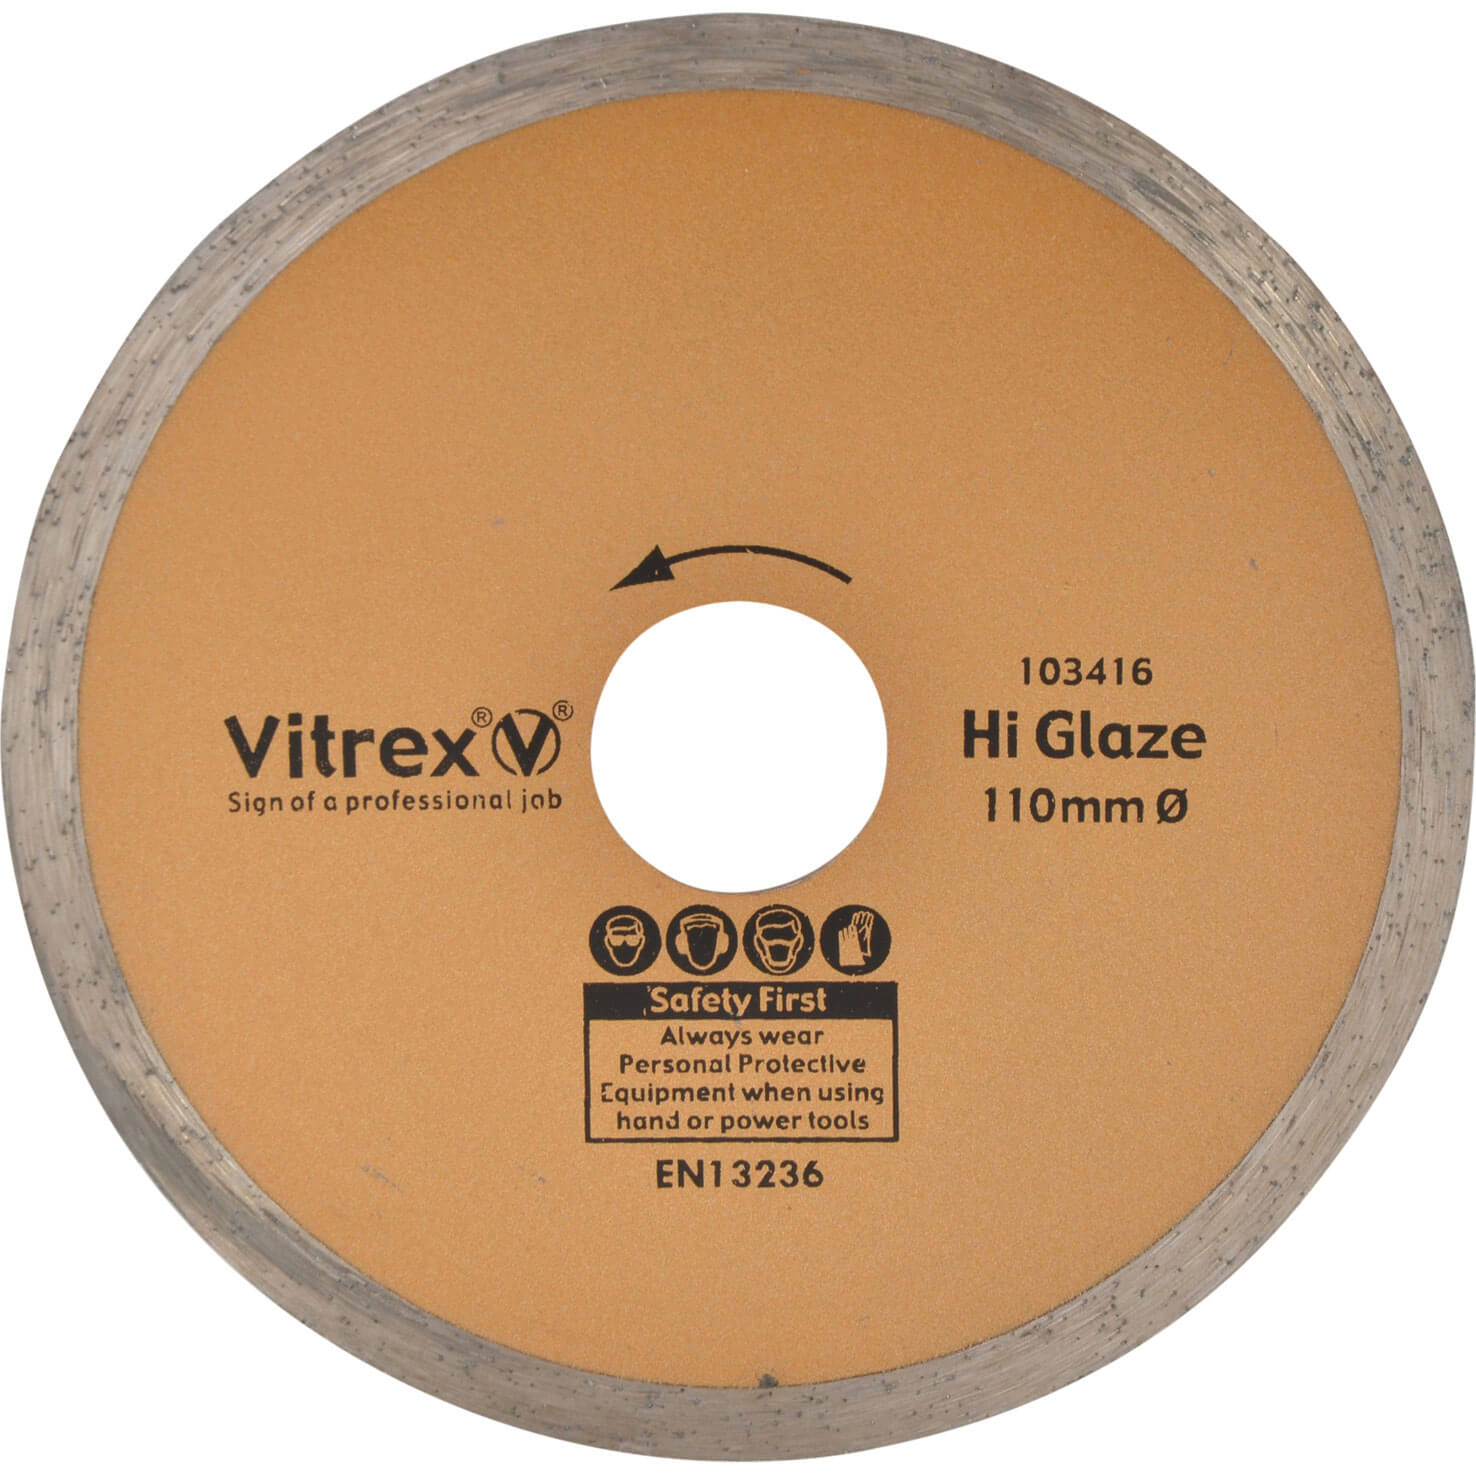 Photo of Vitrex Diamond Hi Glaze Blade 110mm